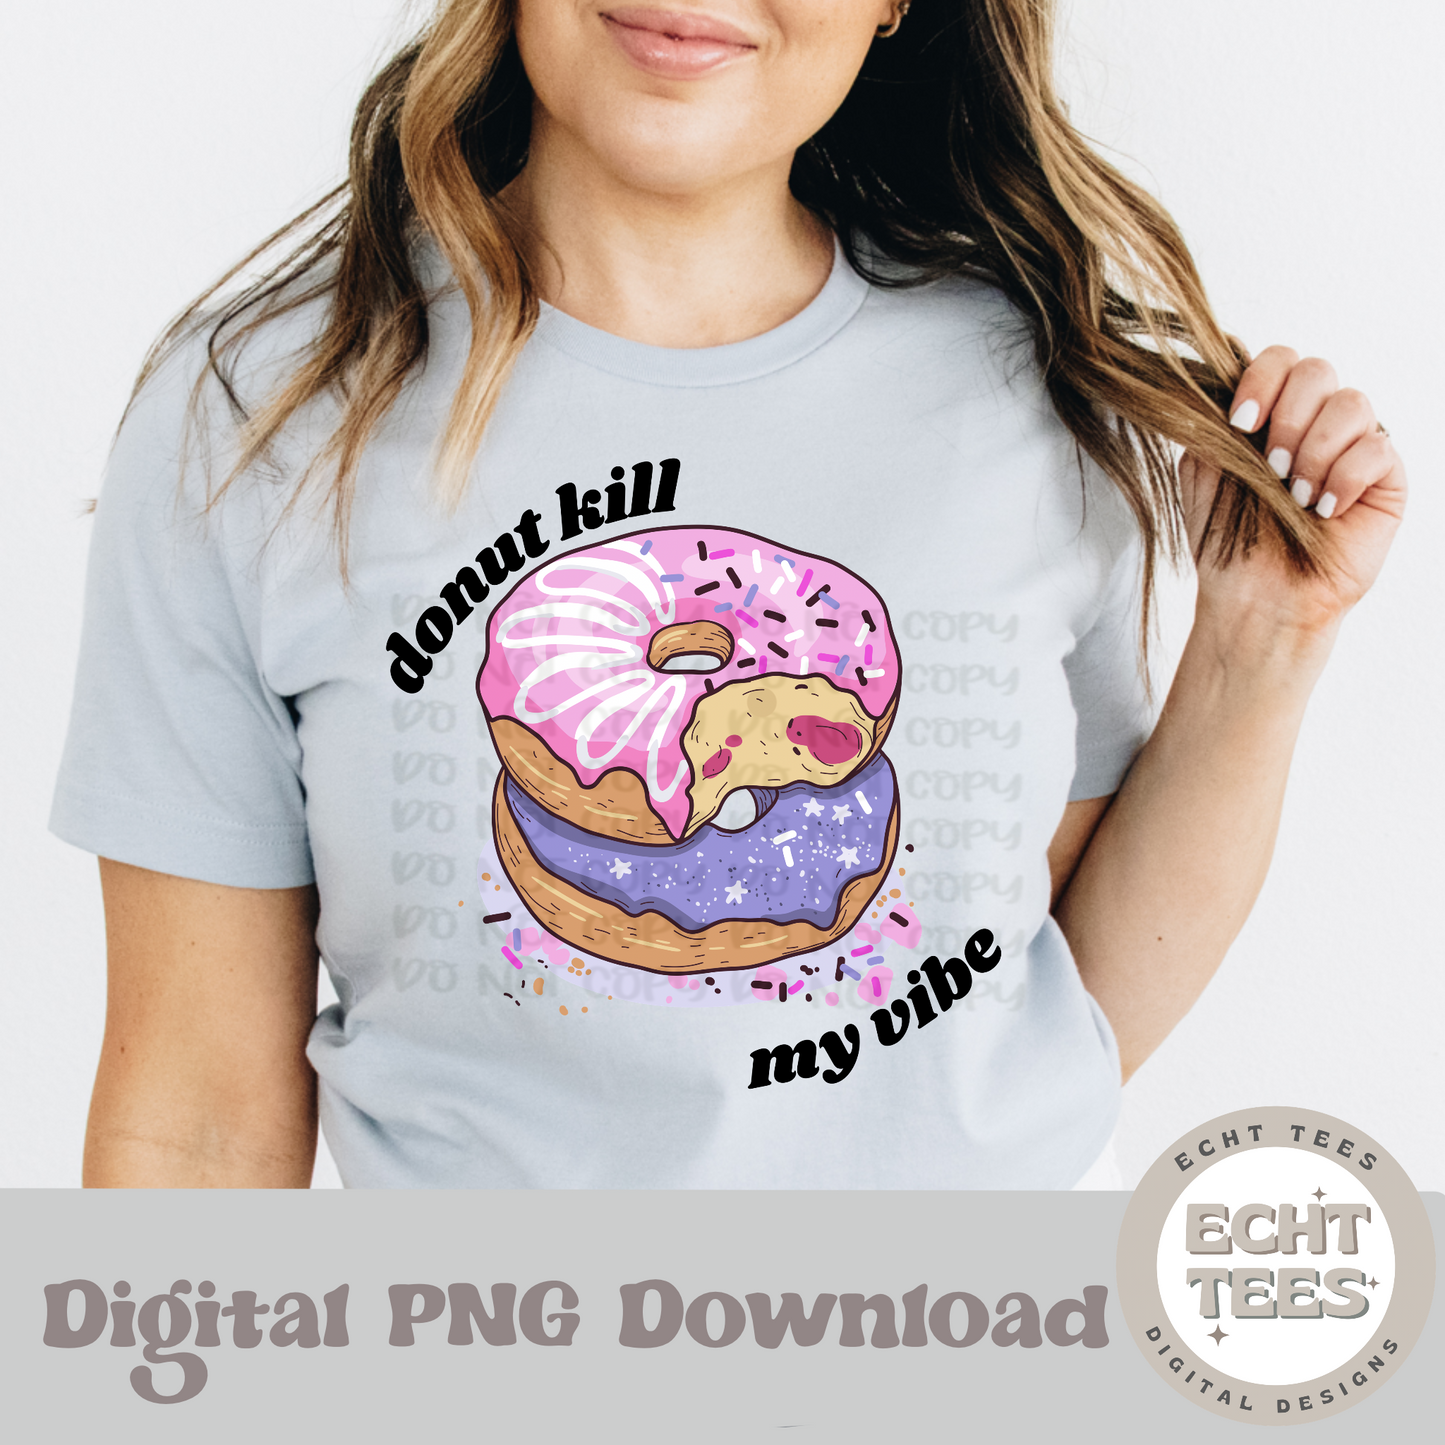 Donut kill me vibe PNG Digital Download